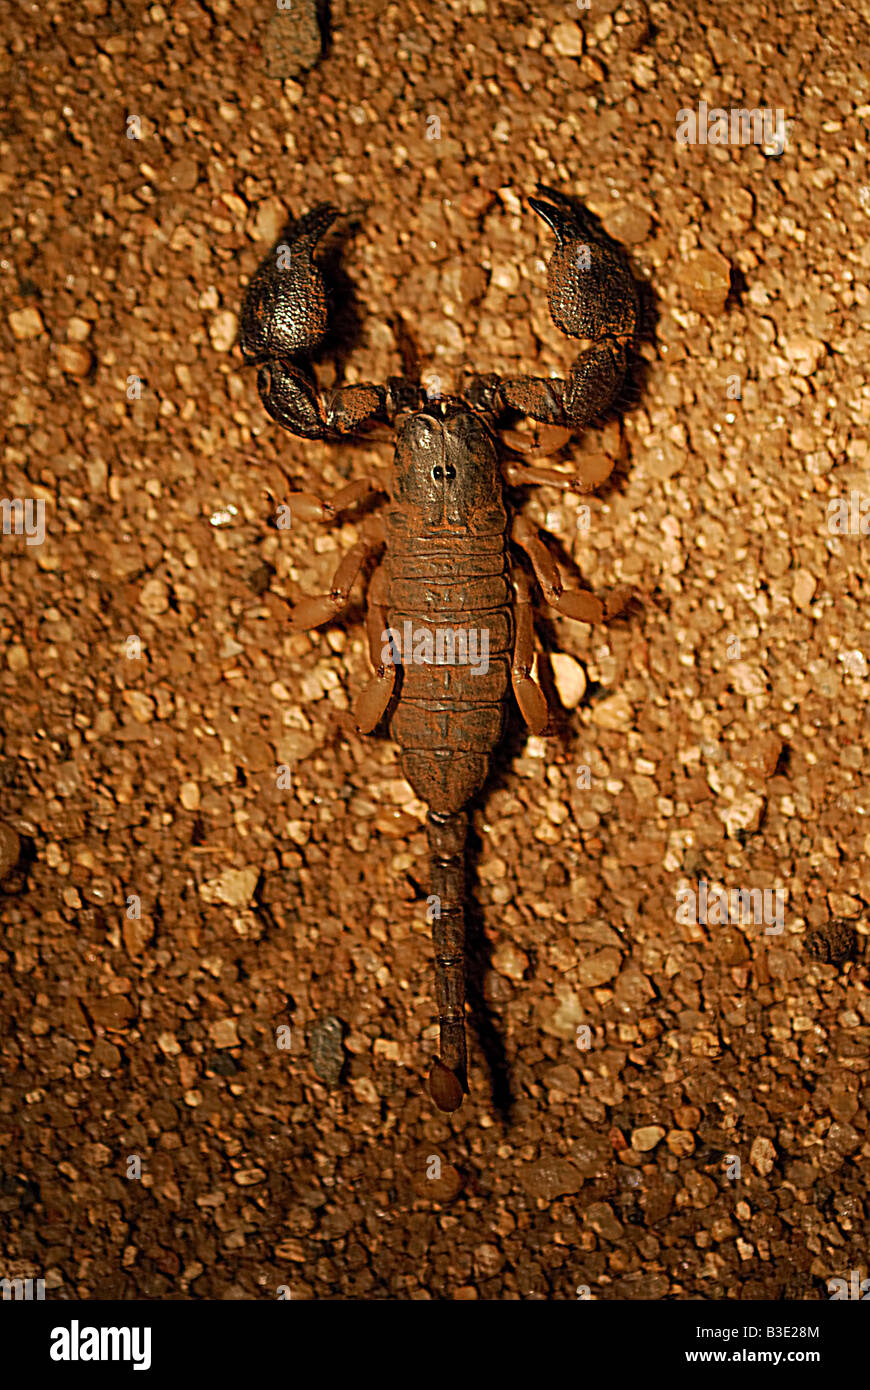 South African Rock Scorpion / Hadogenes troglodytes Stock Photo